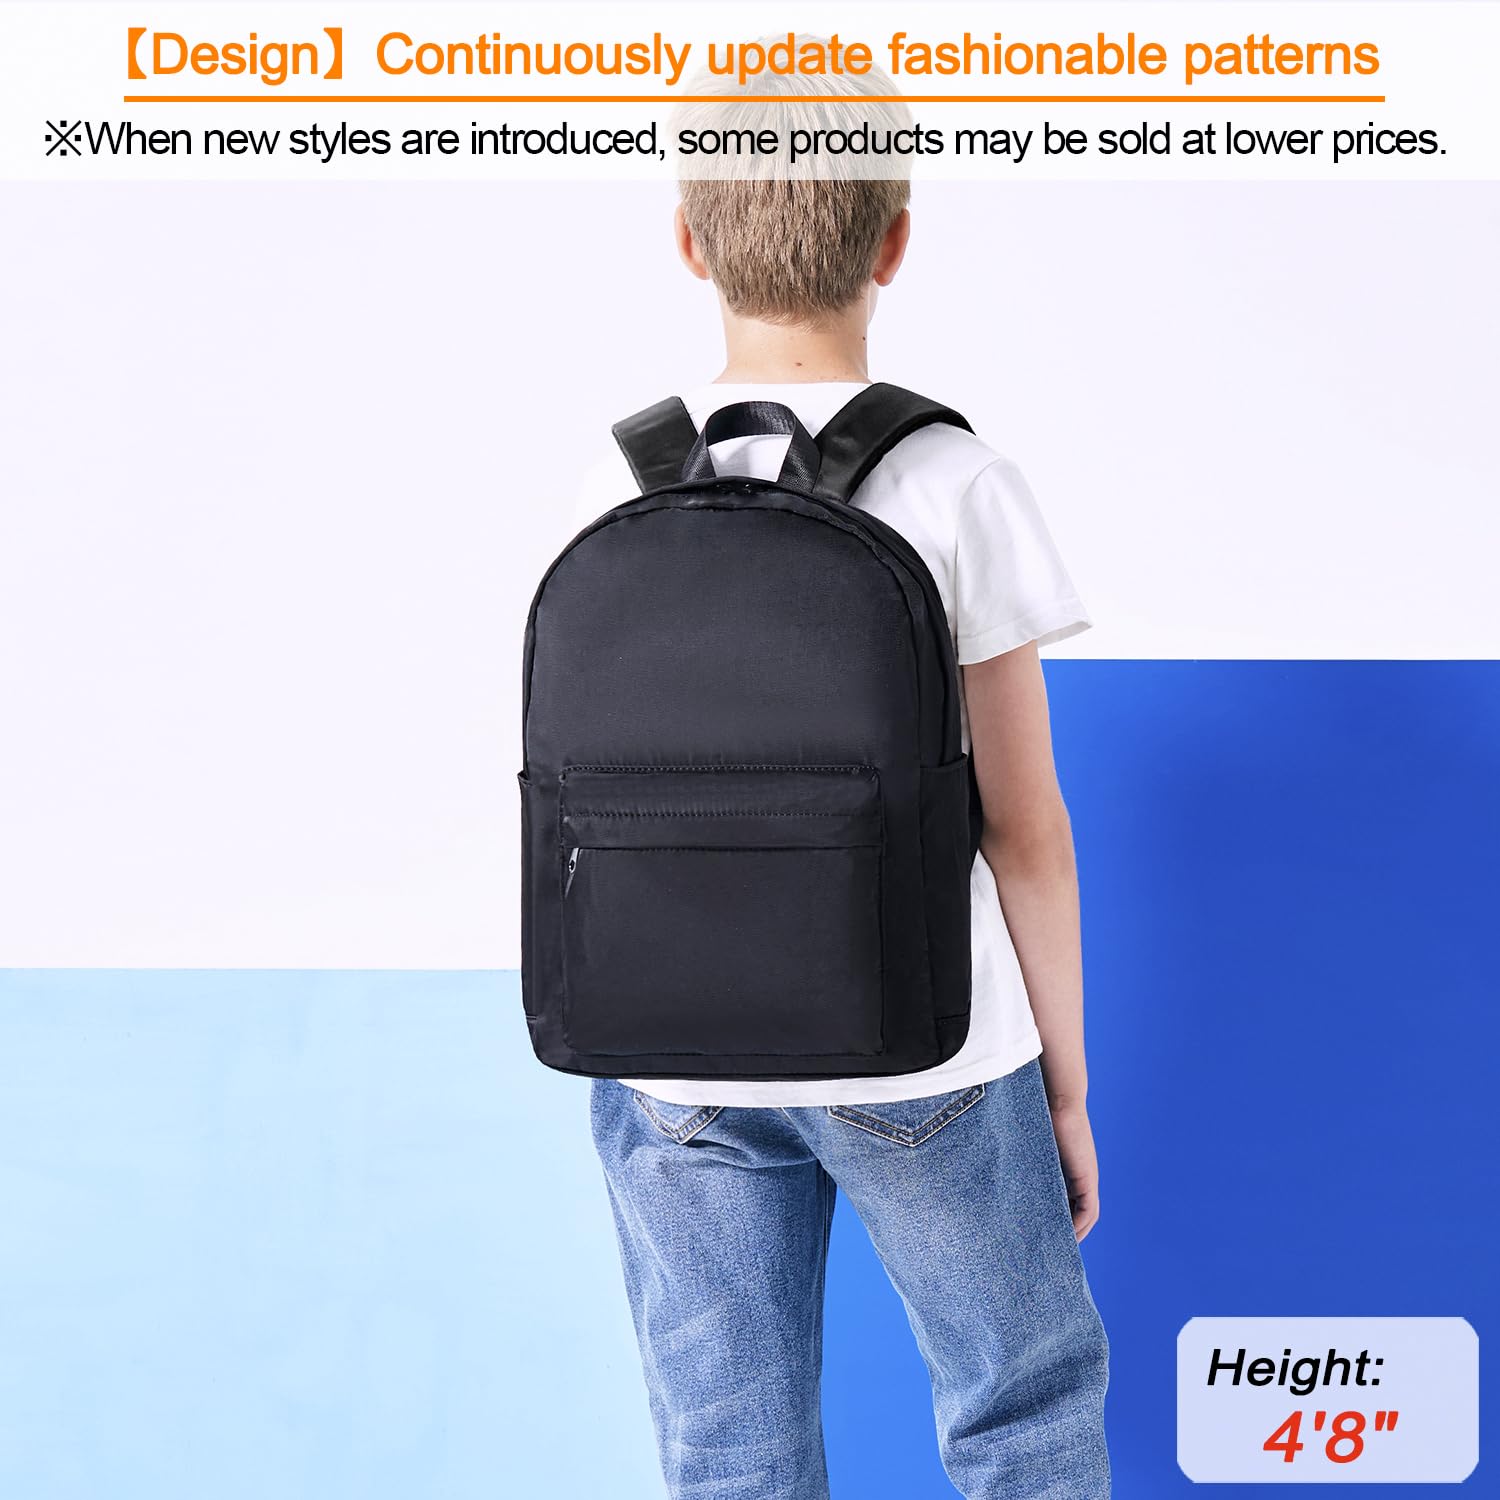 BIGHAS Lightweight Kids Backpack For School Boys and Girls, Preschool Kindergarten, Primary School, Daily Medium Size 3-14 Years Old (Black)